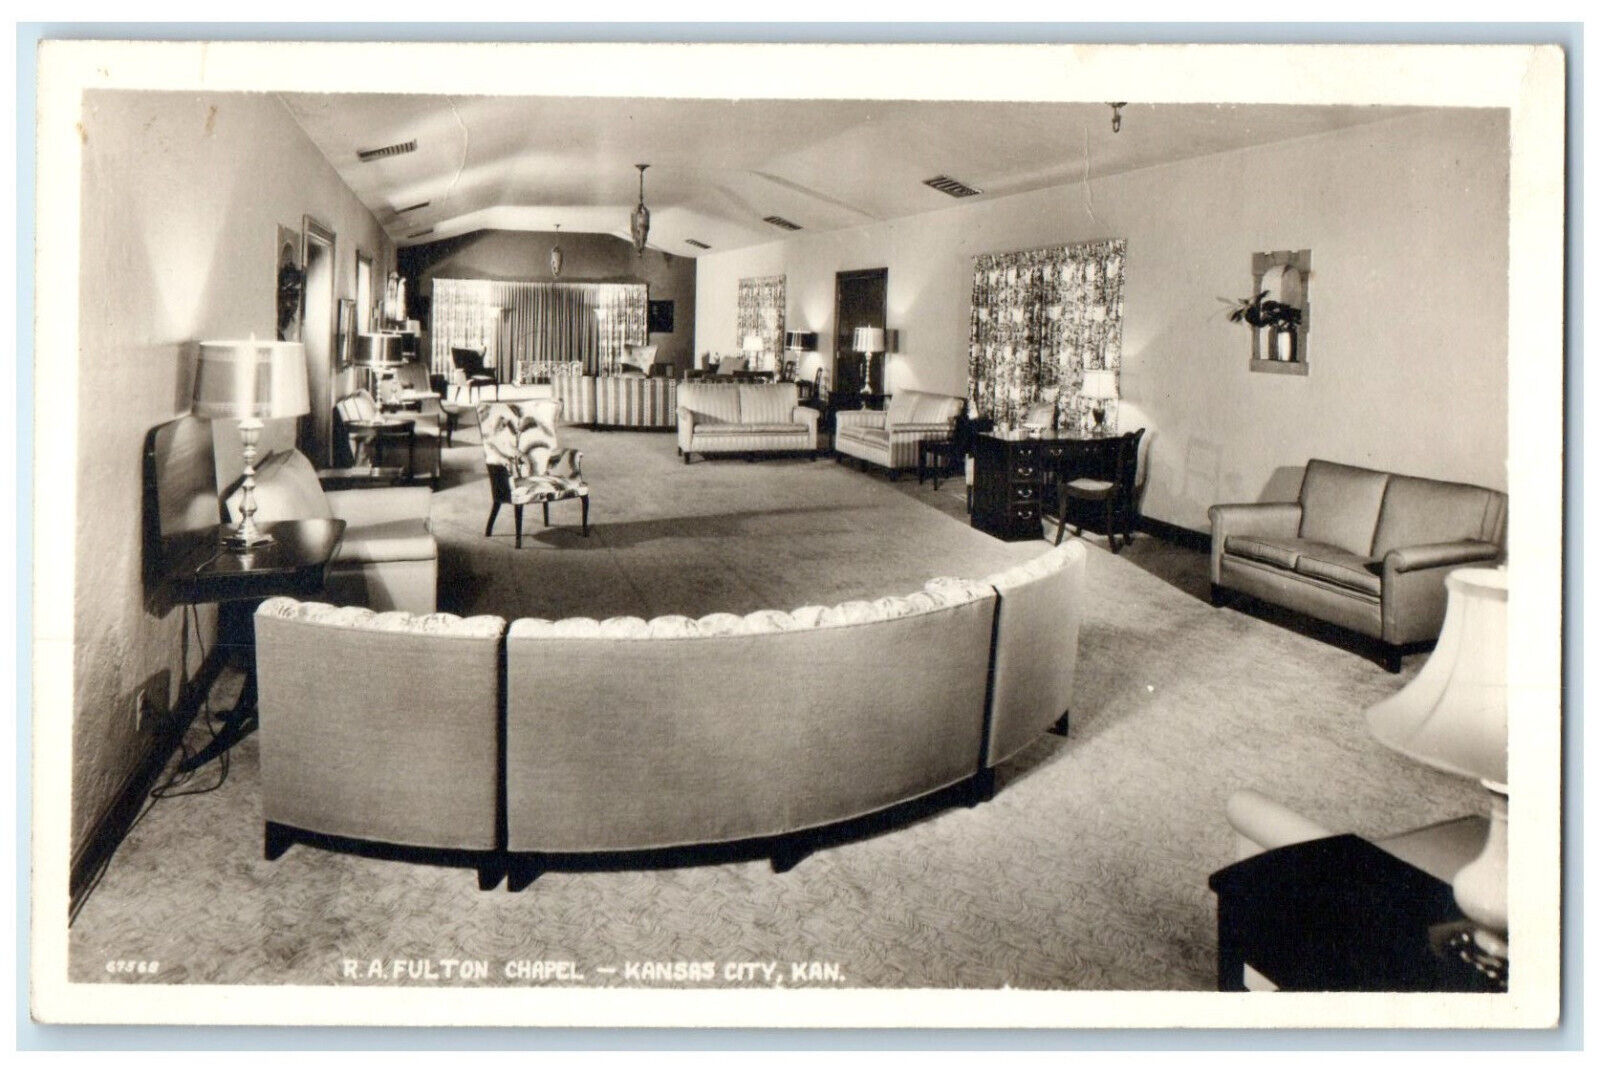 c1950's R.A. Fulton Chapel Kansas City Kansas KS Vintage RPPC Photo Postcard